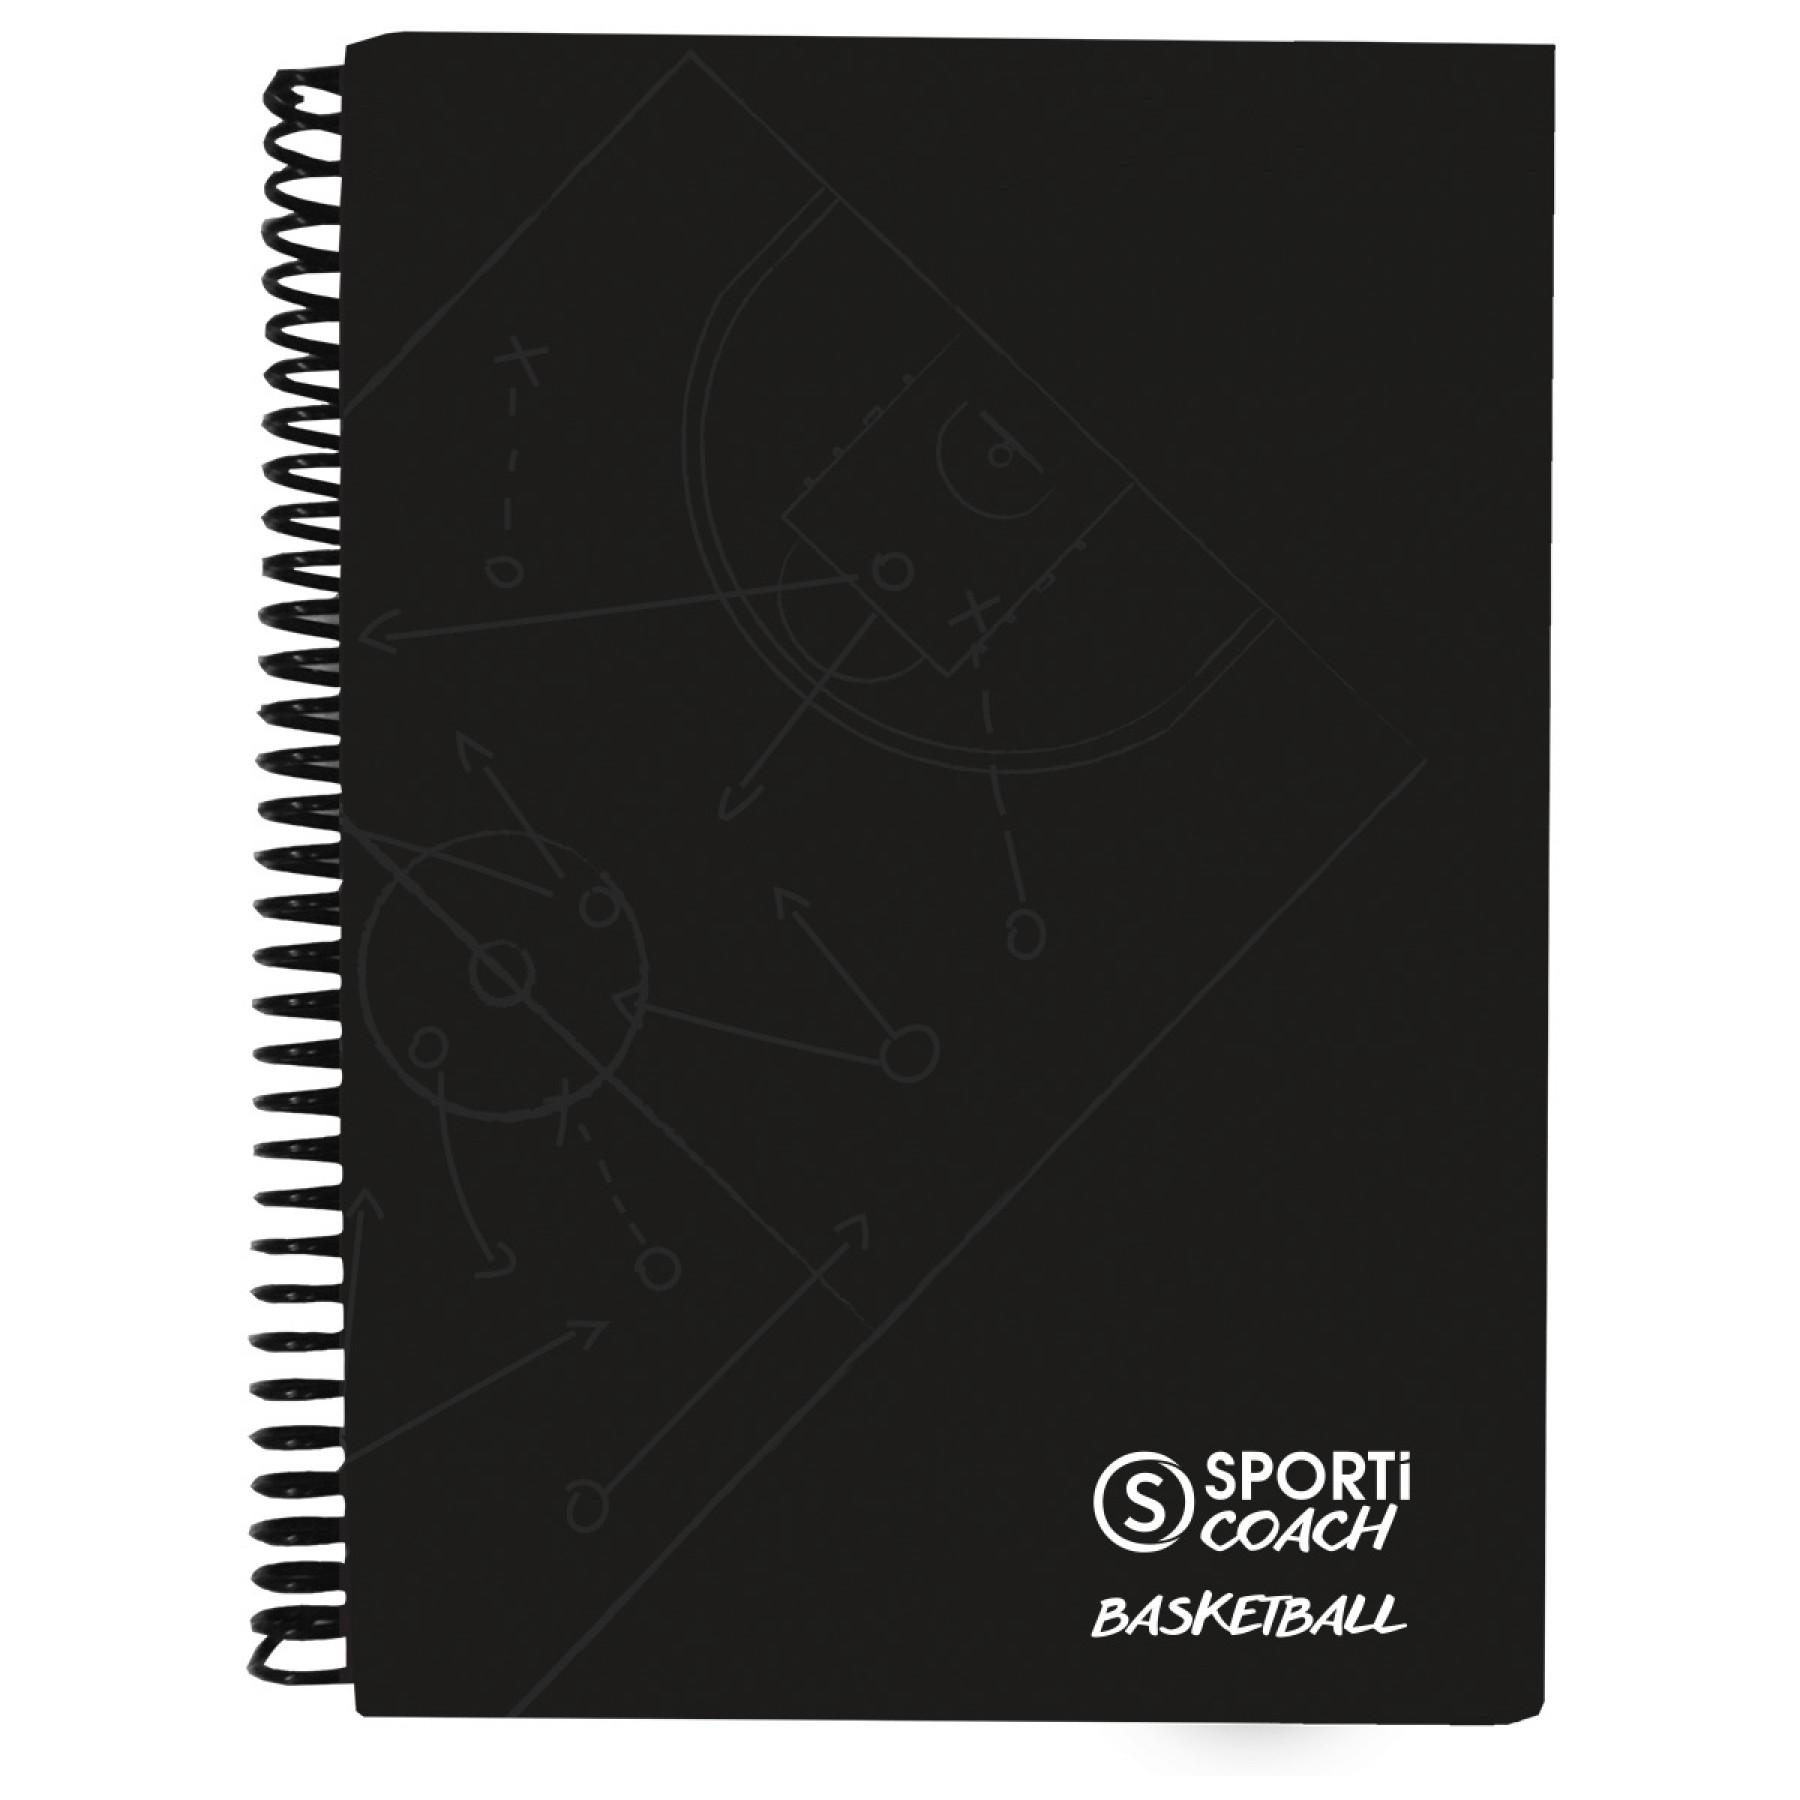 a5 spiral bound basketball coach notebook Sporti